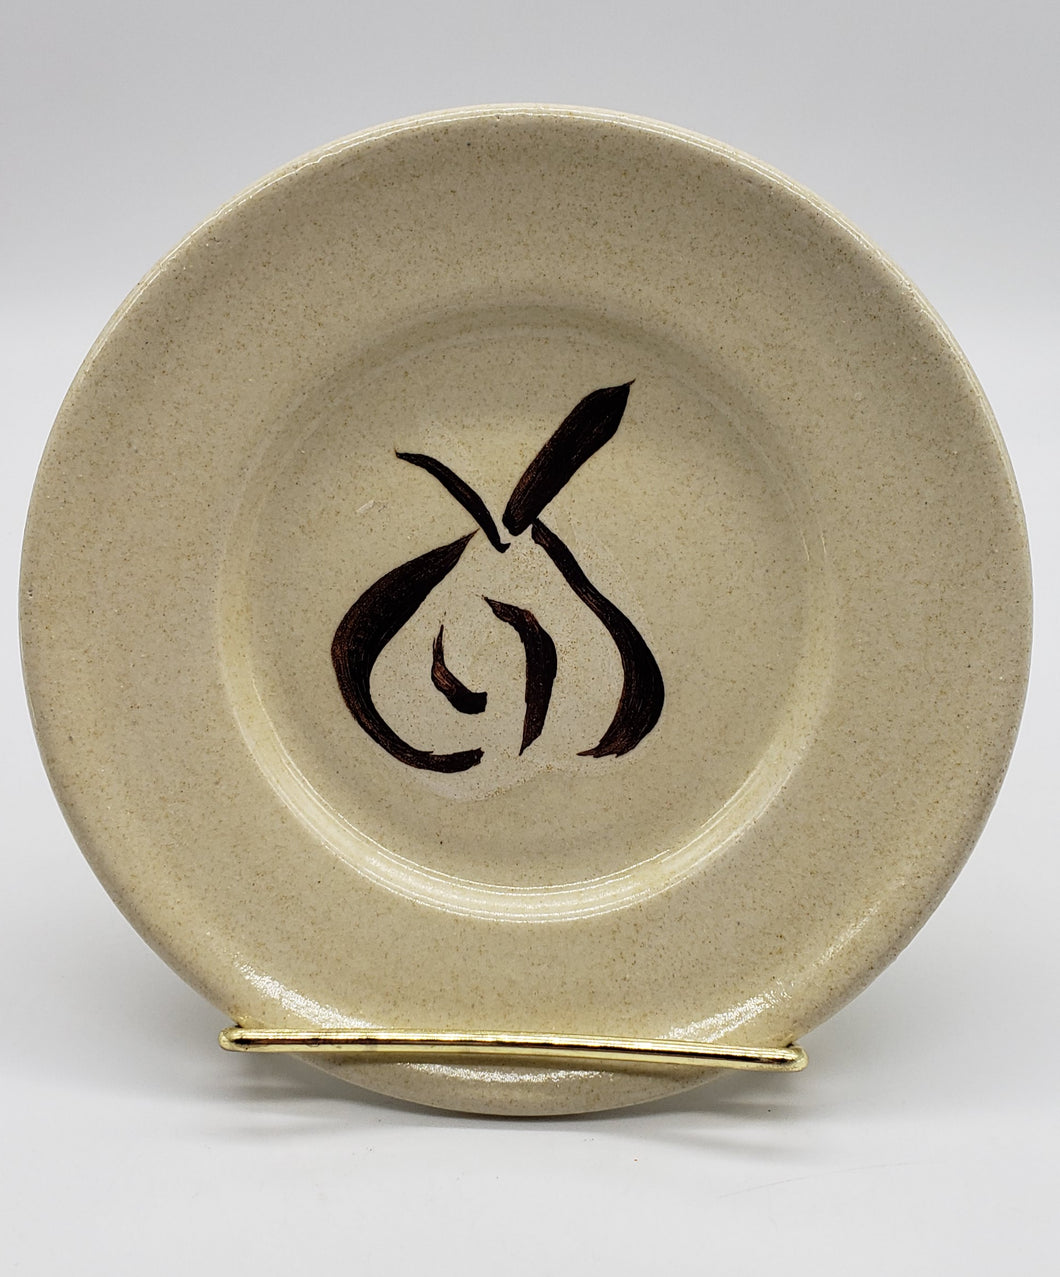 Contemporary Pottery Ltd plate.